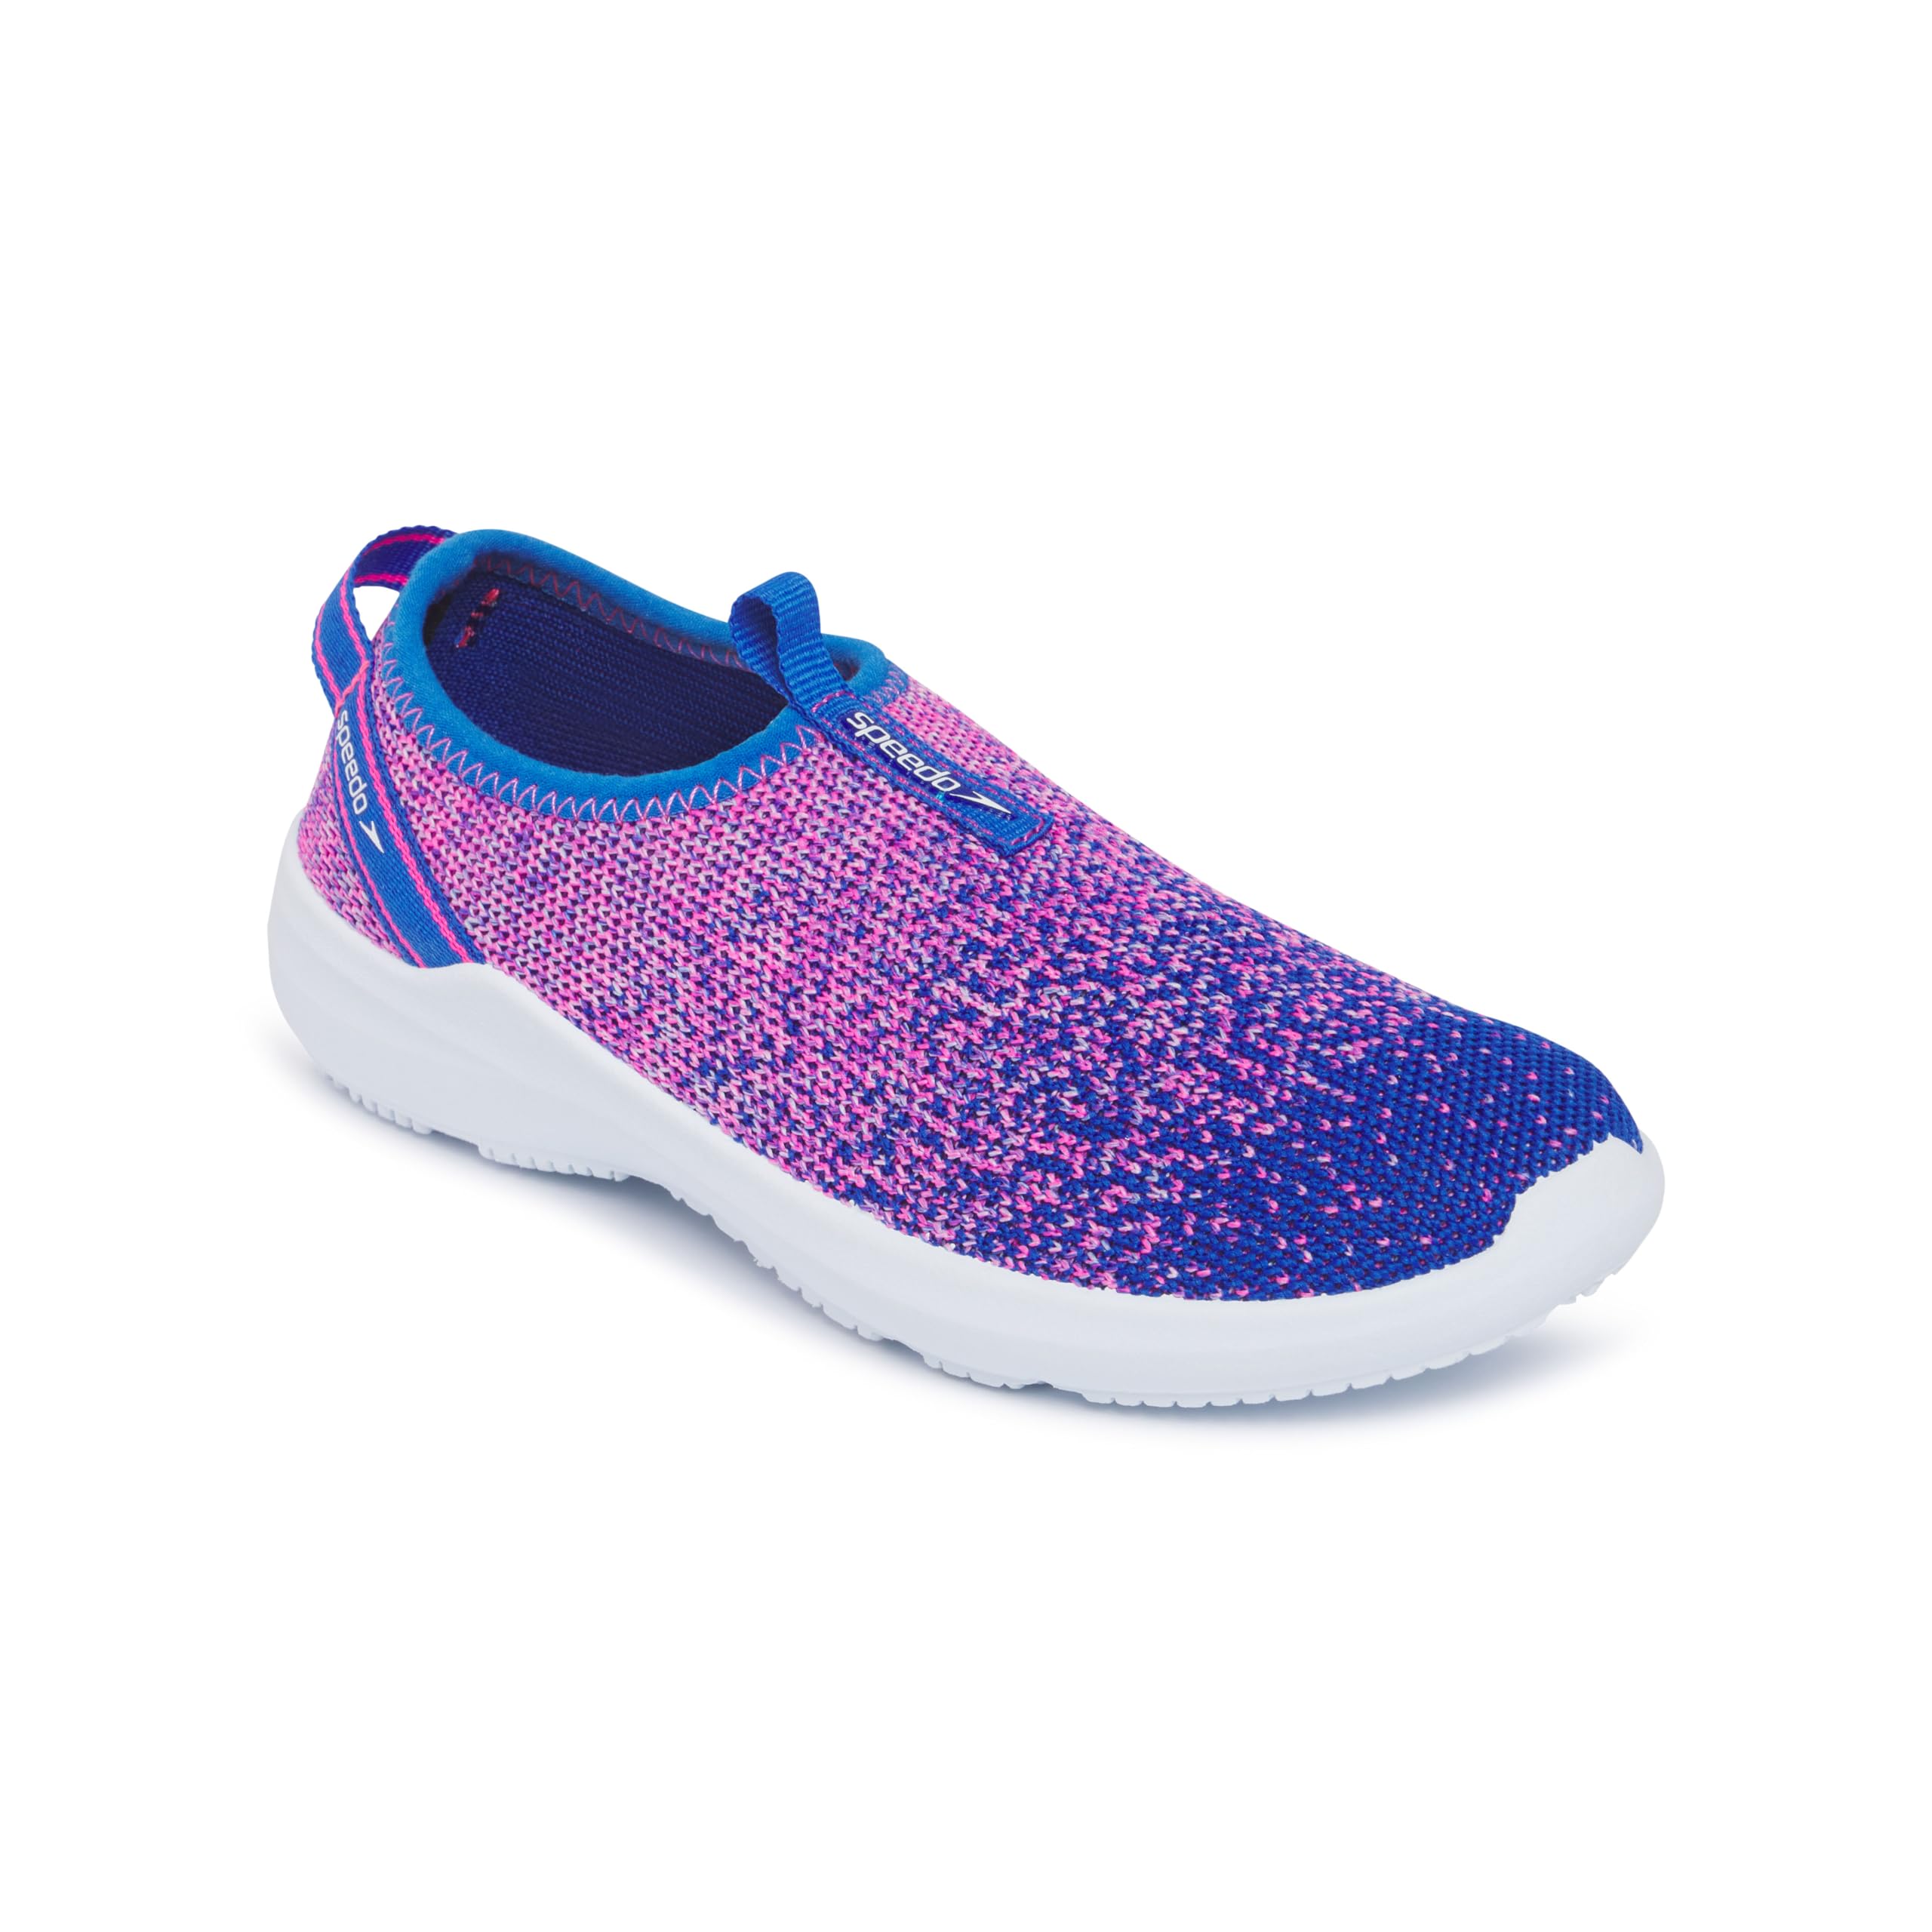 Speedo Water Shoe Surfknit Pro Kids, Turkish Sea/Flare Pink, 1 US Unisex Big